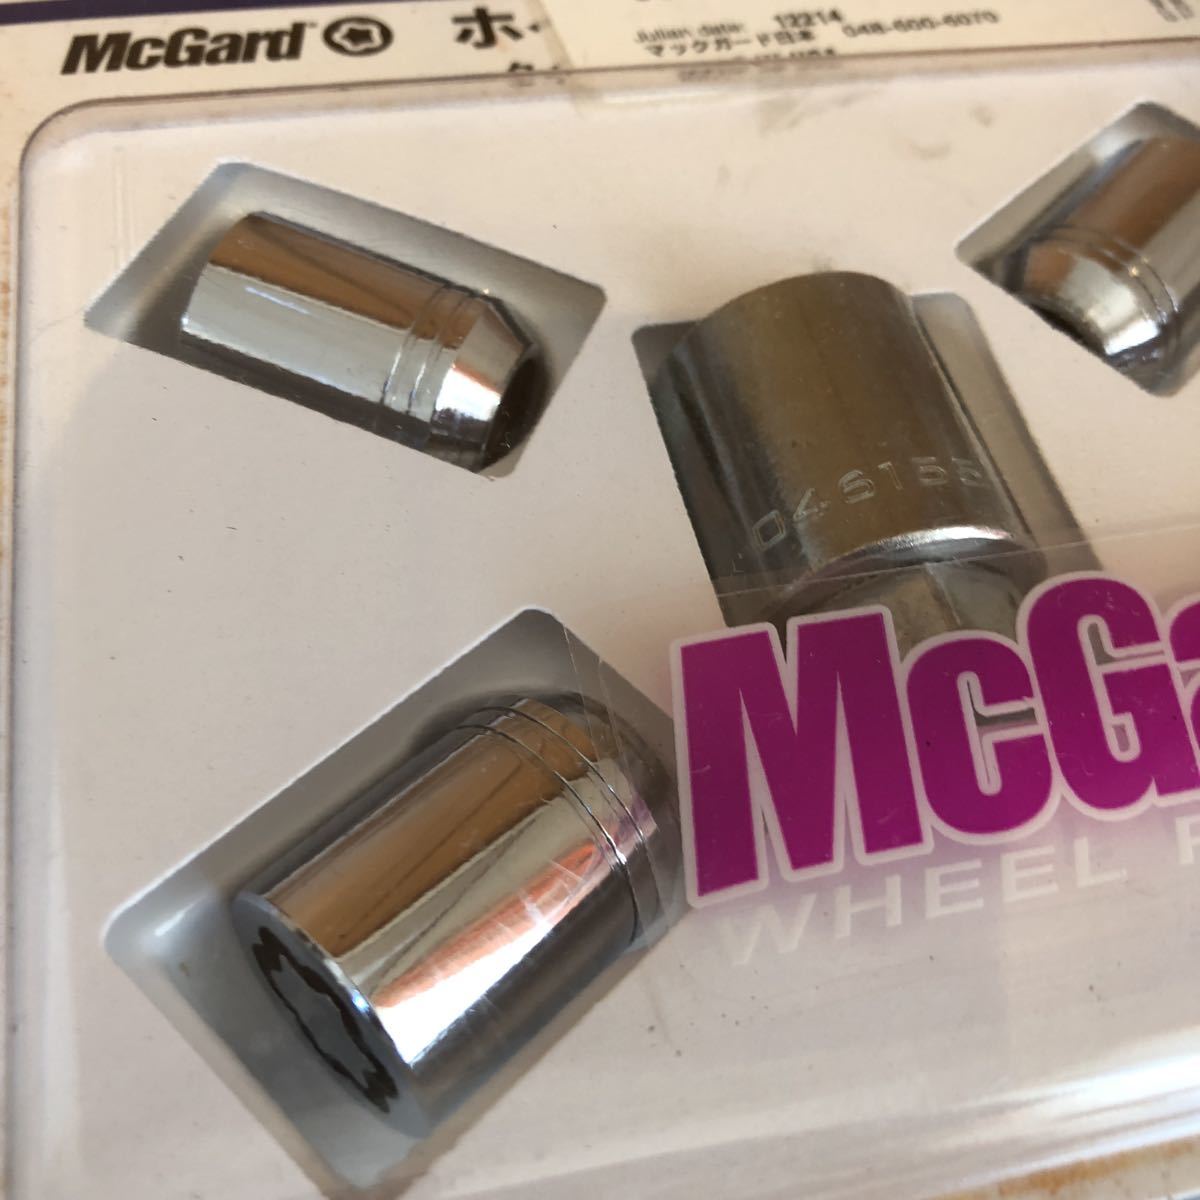 McGard wheel lock anti-theft for.McGard sticker attaching 